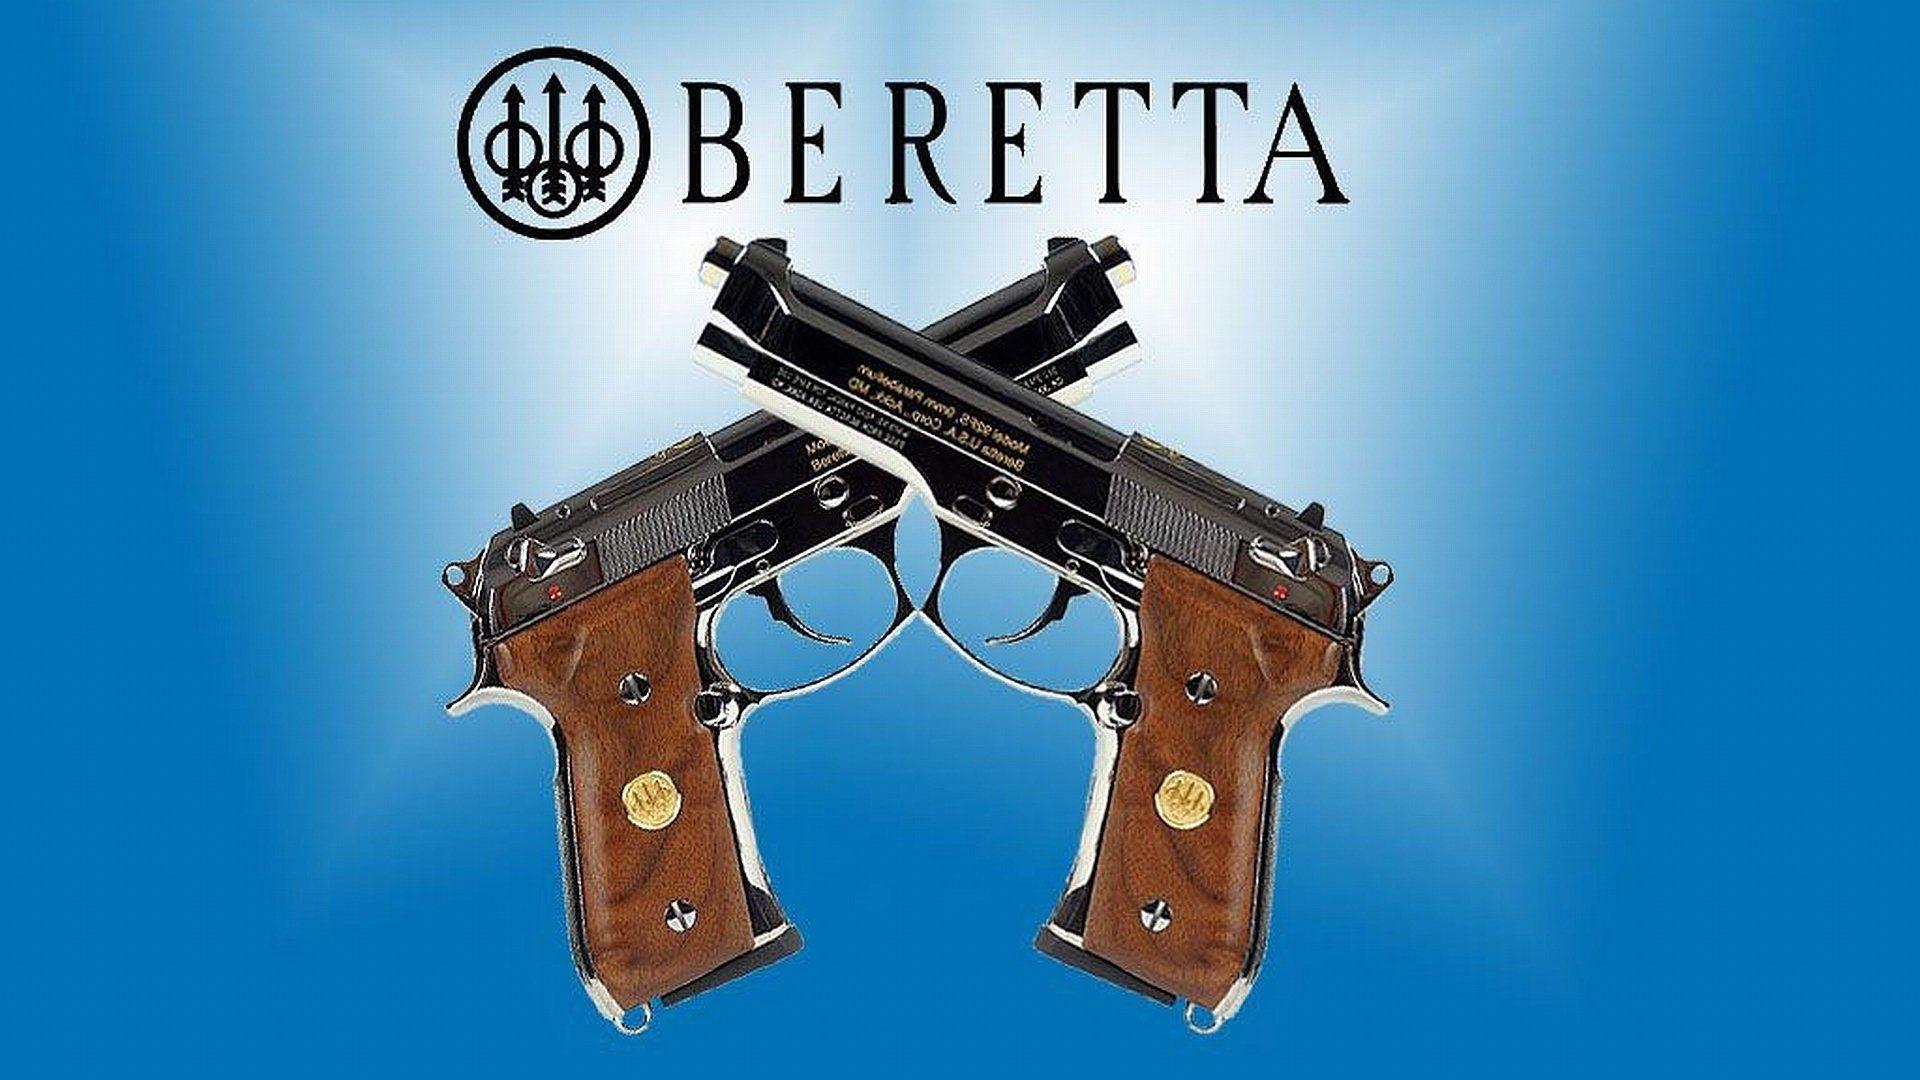 Beretta Pistol HD Wallpaper and Background Image